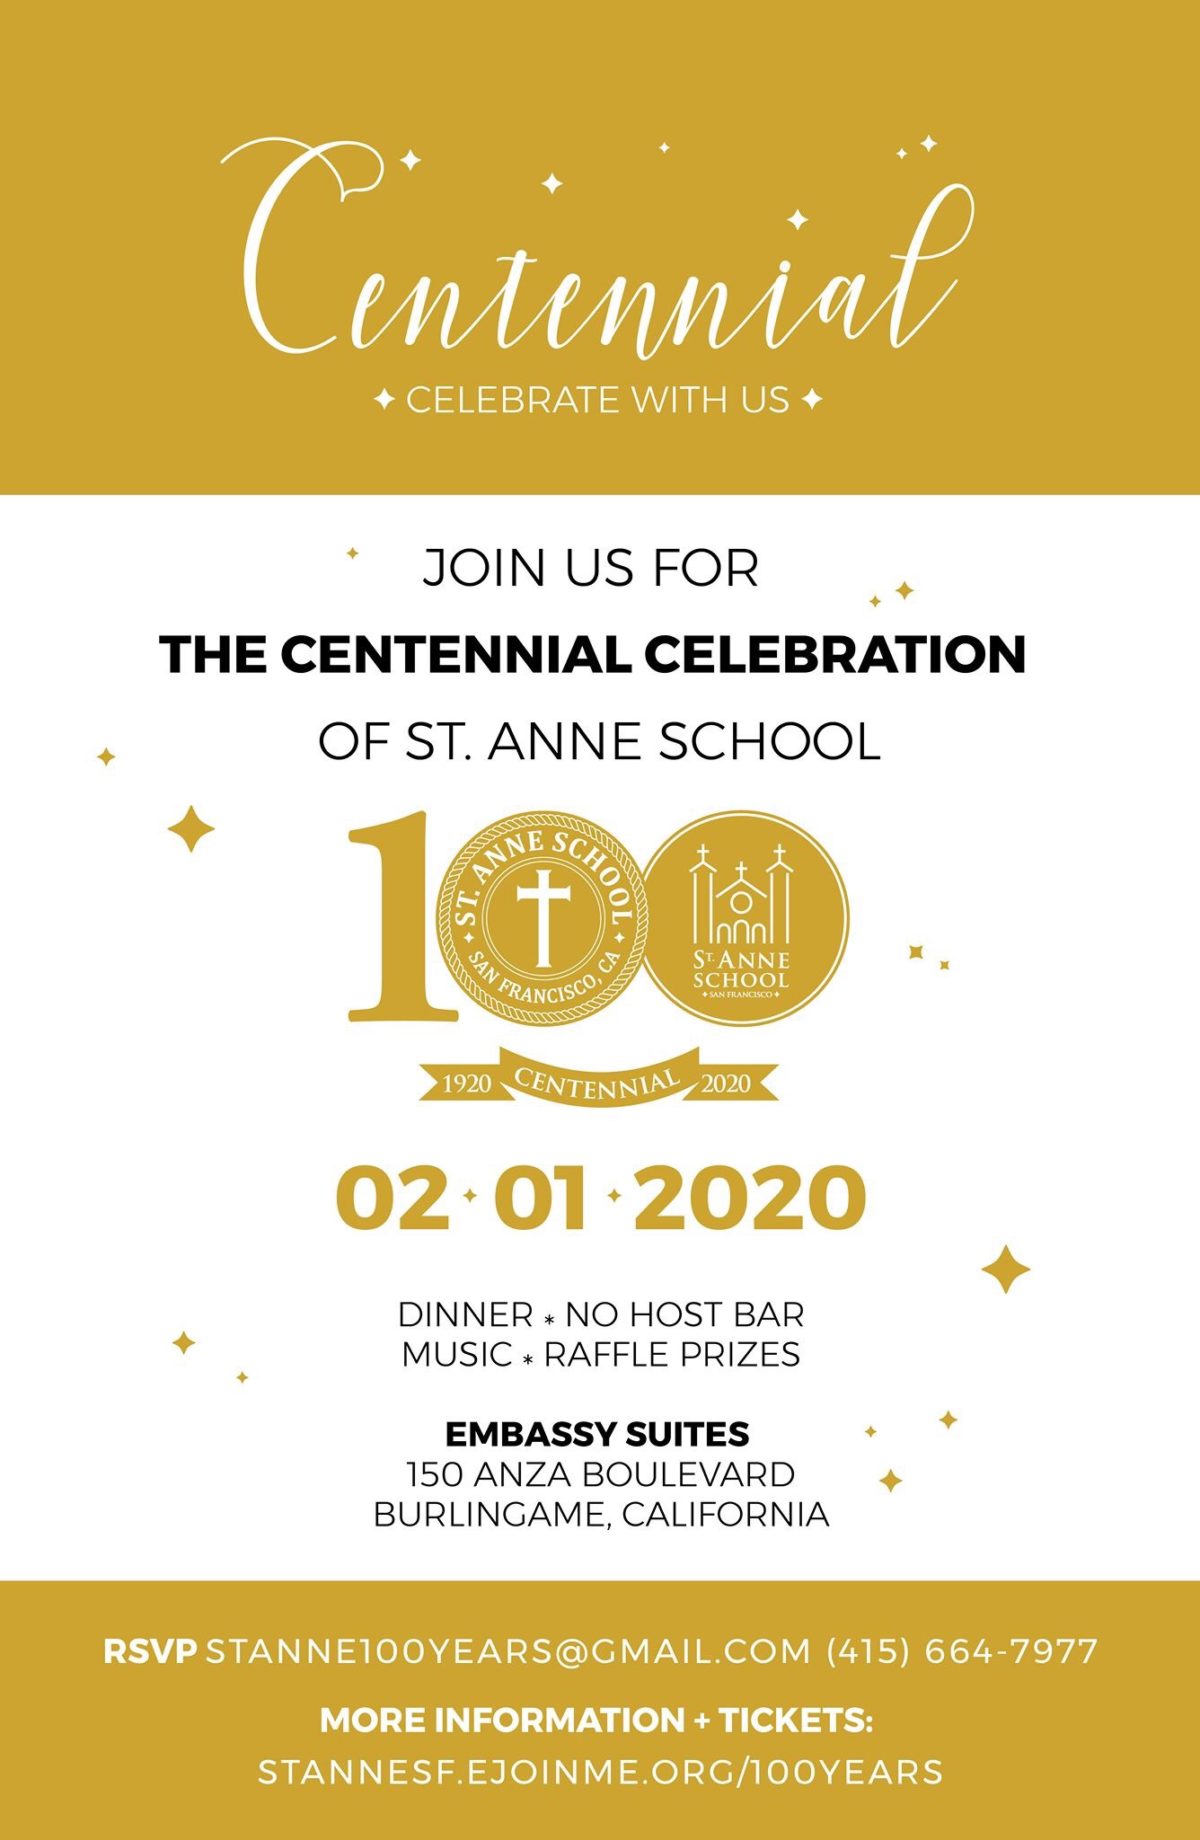 St. Anne School Centennial Gala: Buy Tickets Now